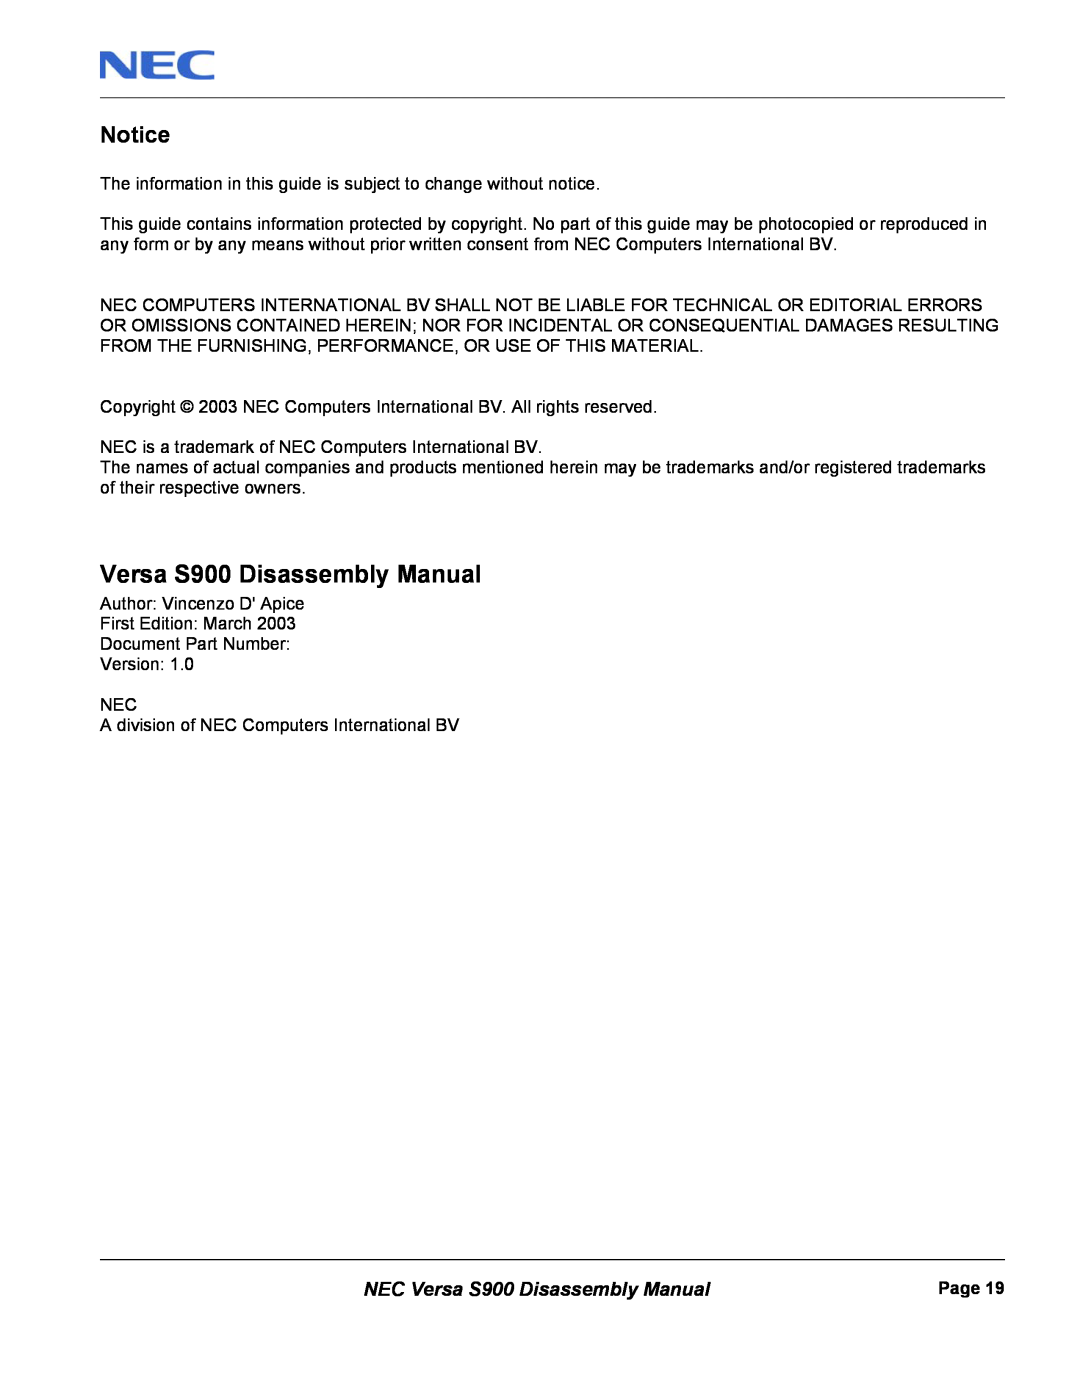 NEC manual Notice, NEC Versa S900 Disassembly Manual 